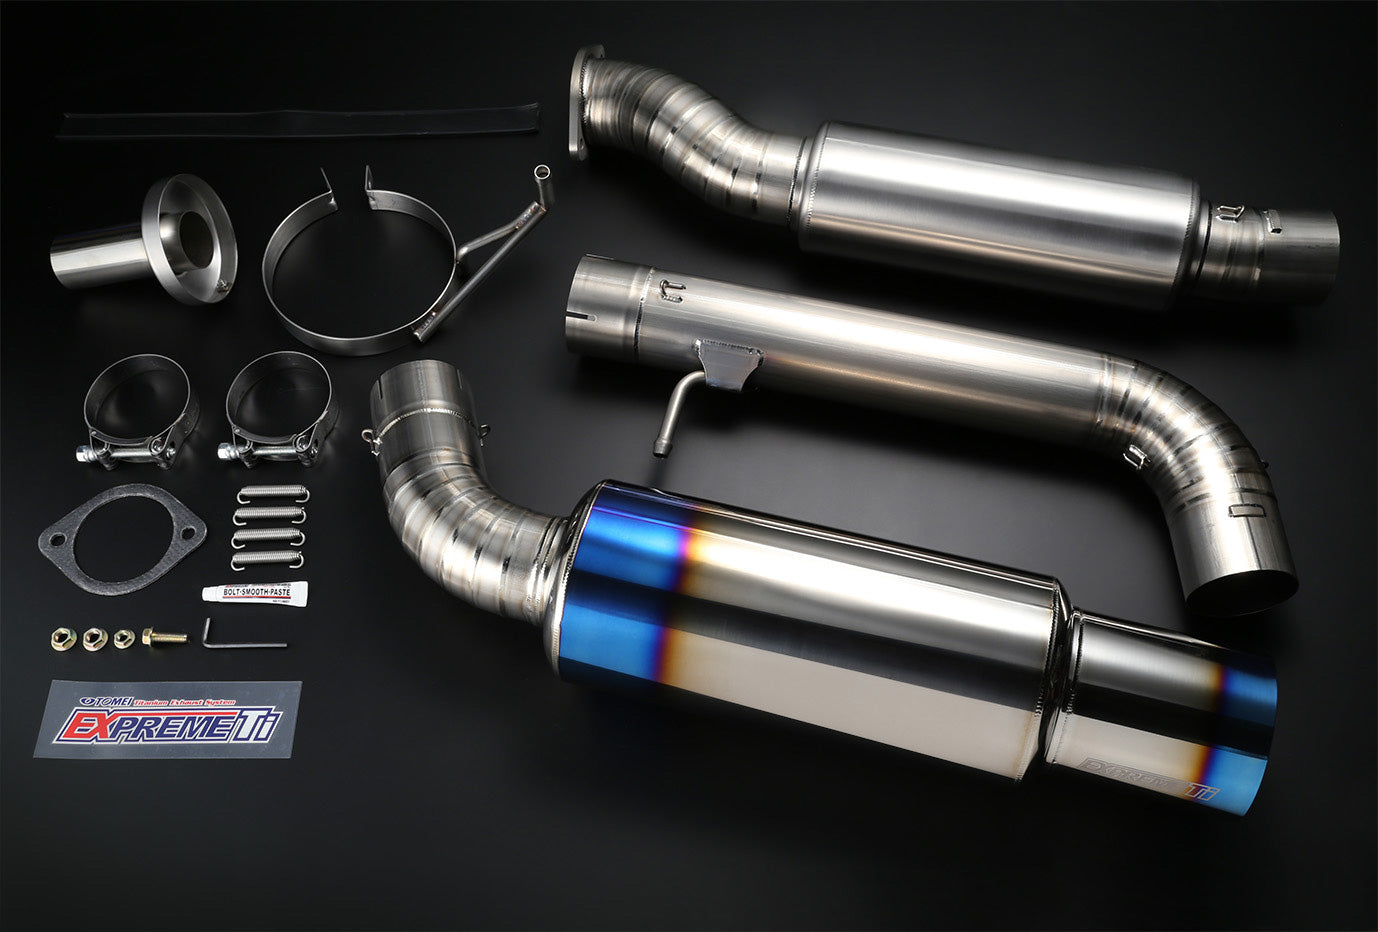 Tomei - Expreme 370Z Titanium Exhaust Muffler (TB6090-NS02A)